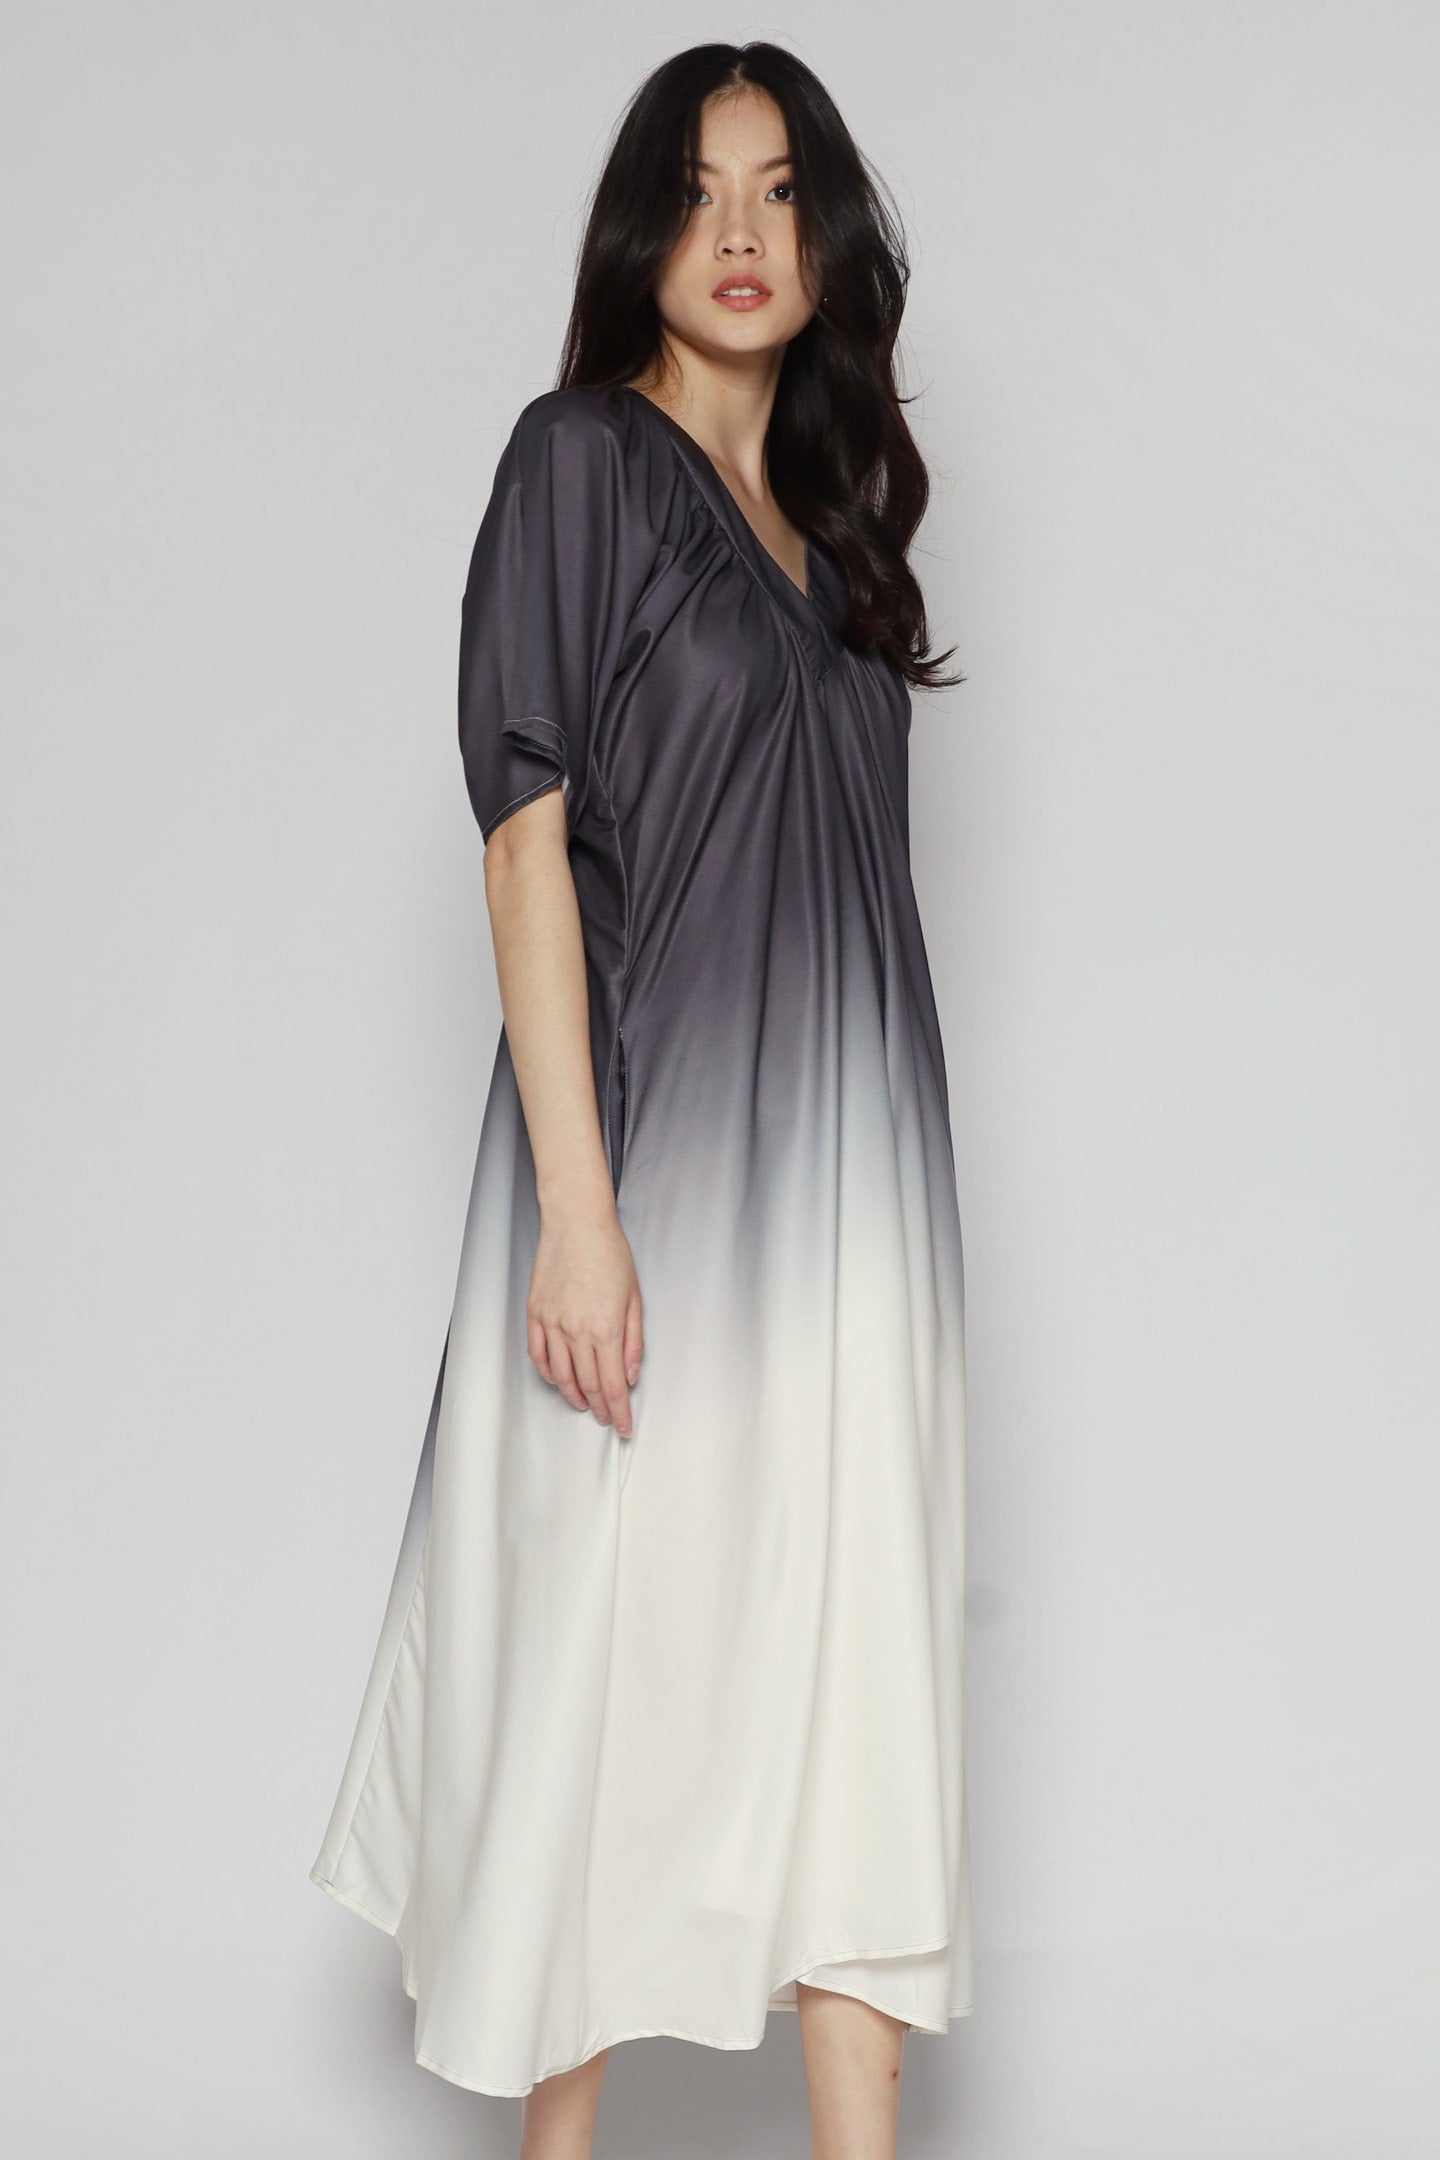 Whitney V Dress in Grey Gradient